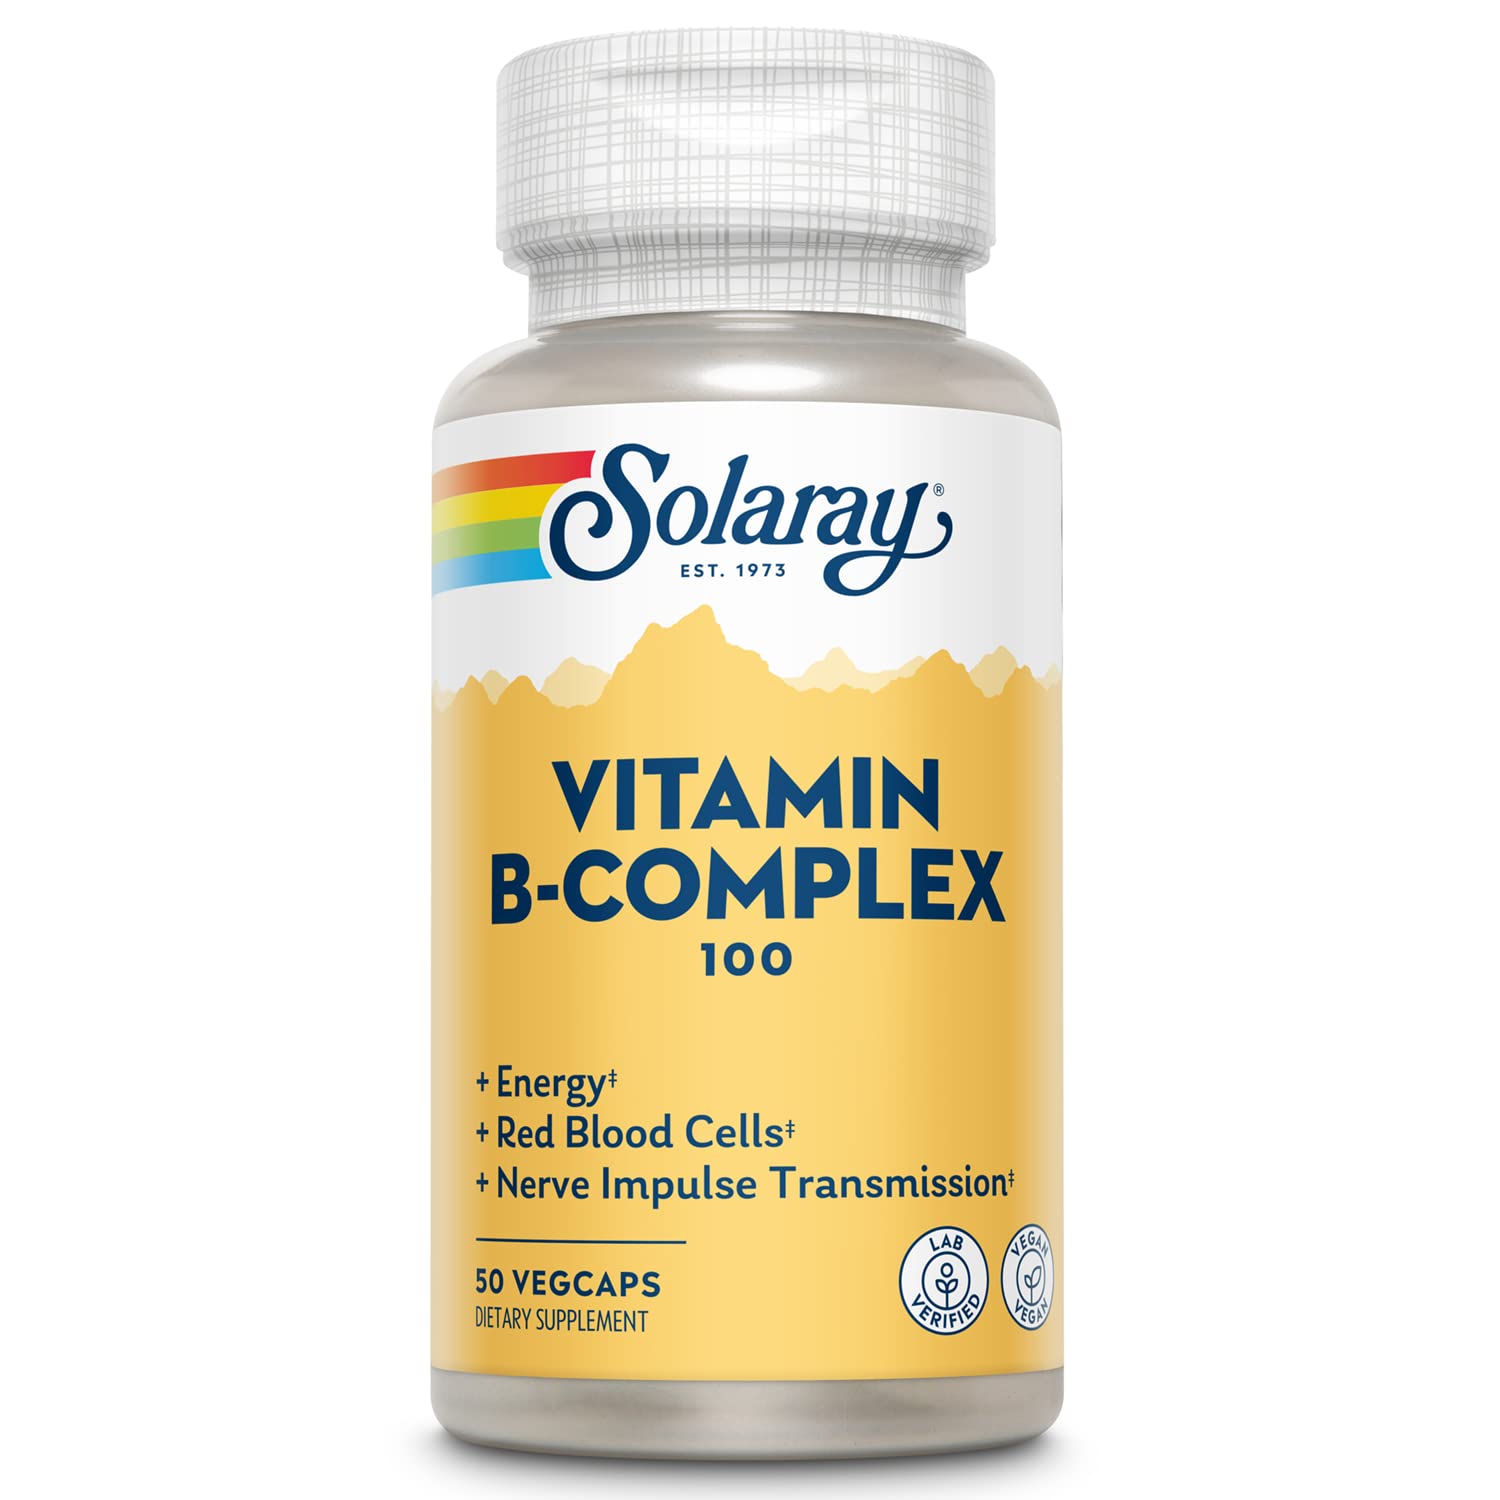 Solaray Vitamin B-Complex 100 - 50 VegCaps